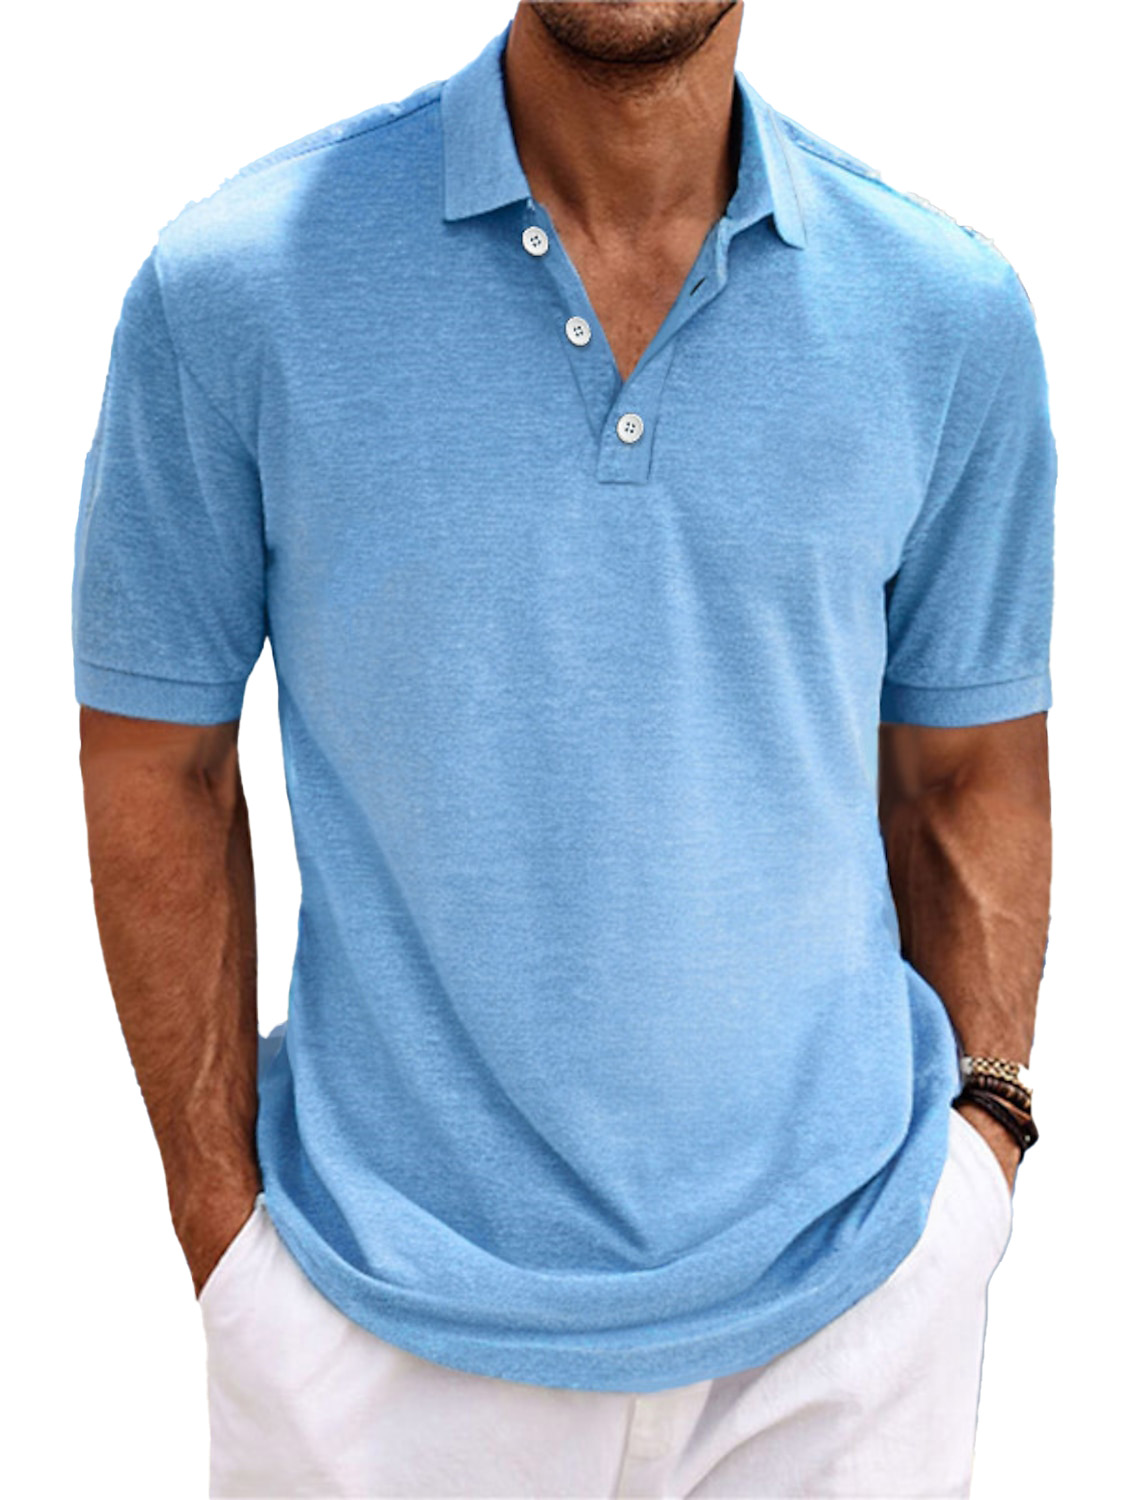 Men'sStylish Casual Polo Short Sleeve Top-Garamode